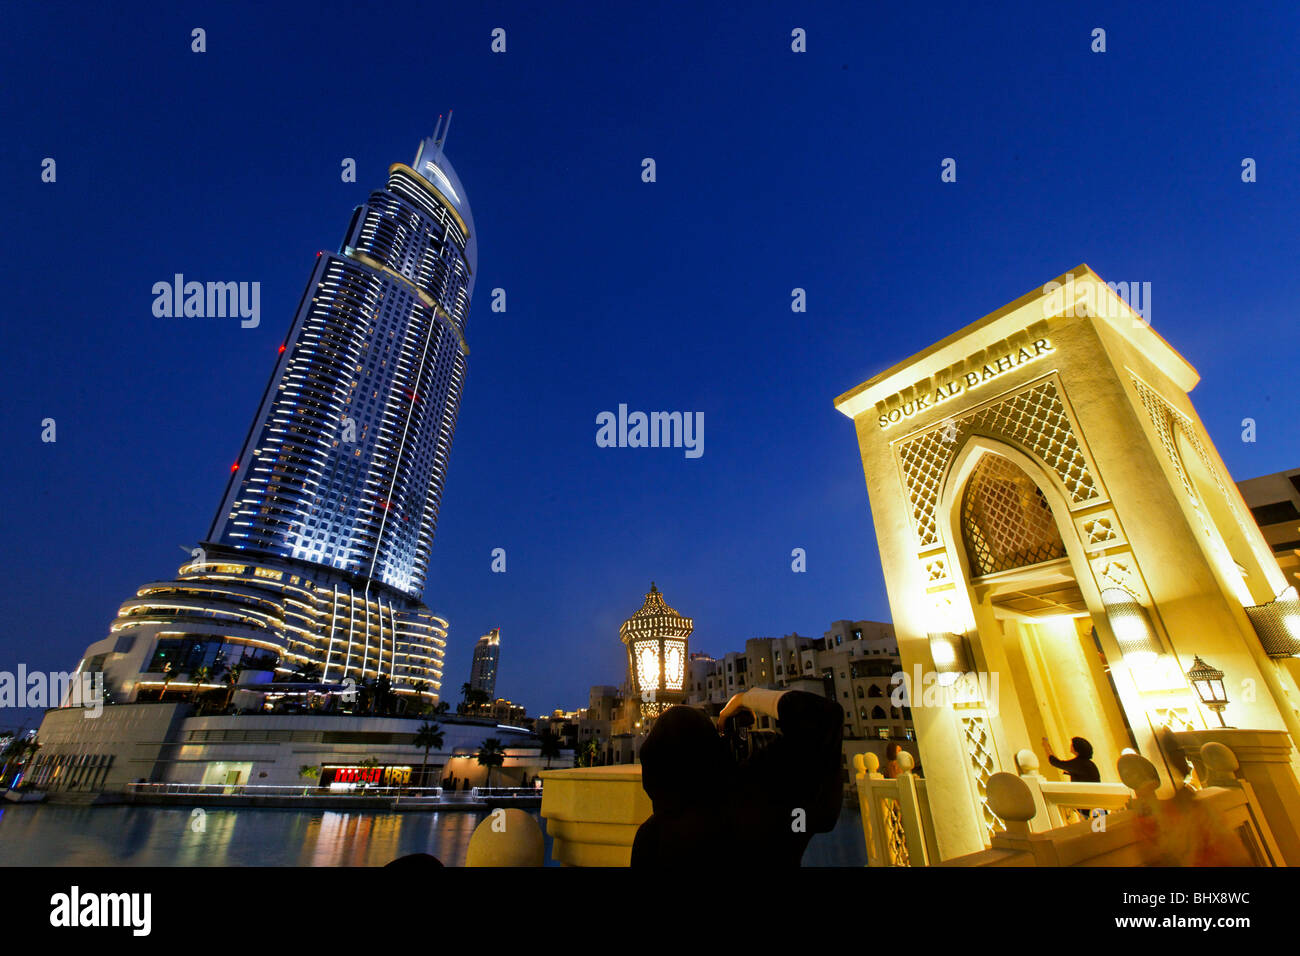 The Adress Five Star Hotel near Burj Khalifa nad Dubai Mall, Stock Photo